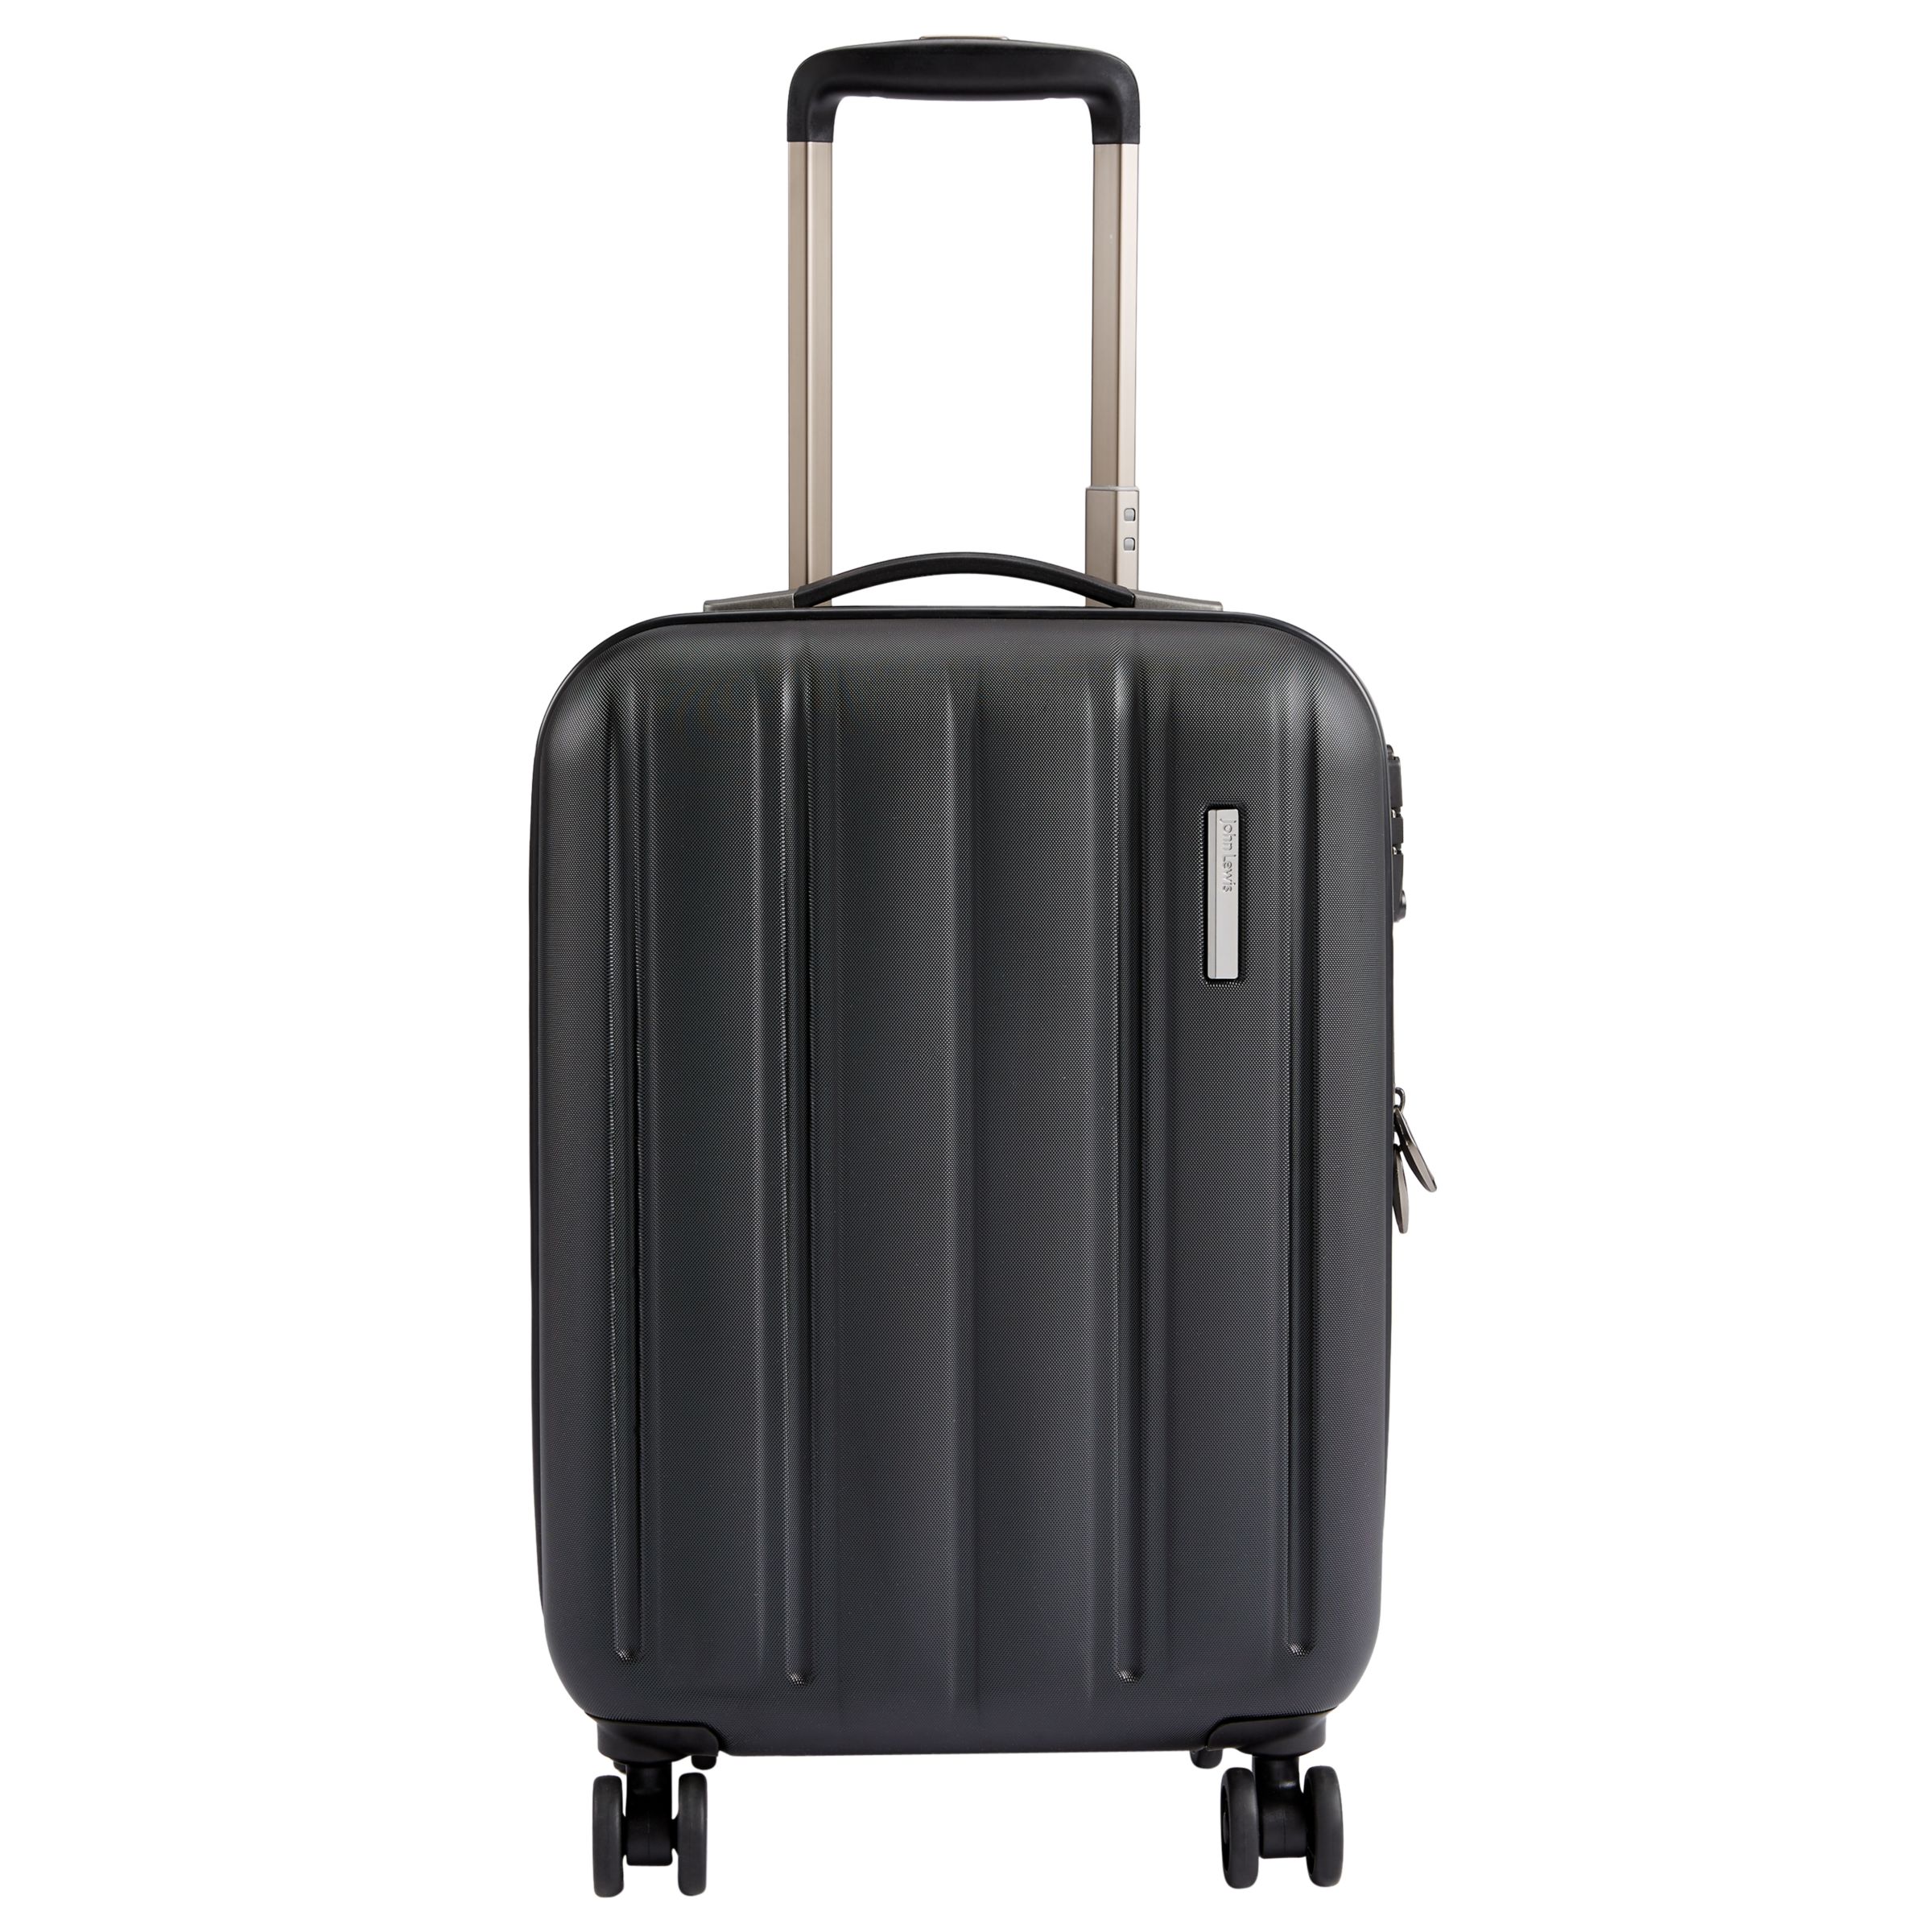 John Lewis & Partners Munich 4 Wheel 55cm Cabin Suitcase, Black